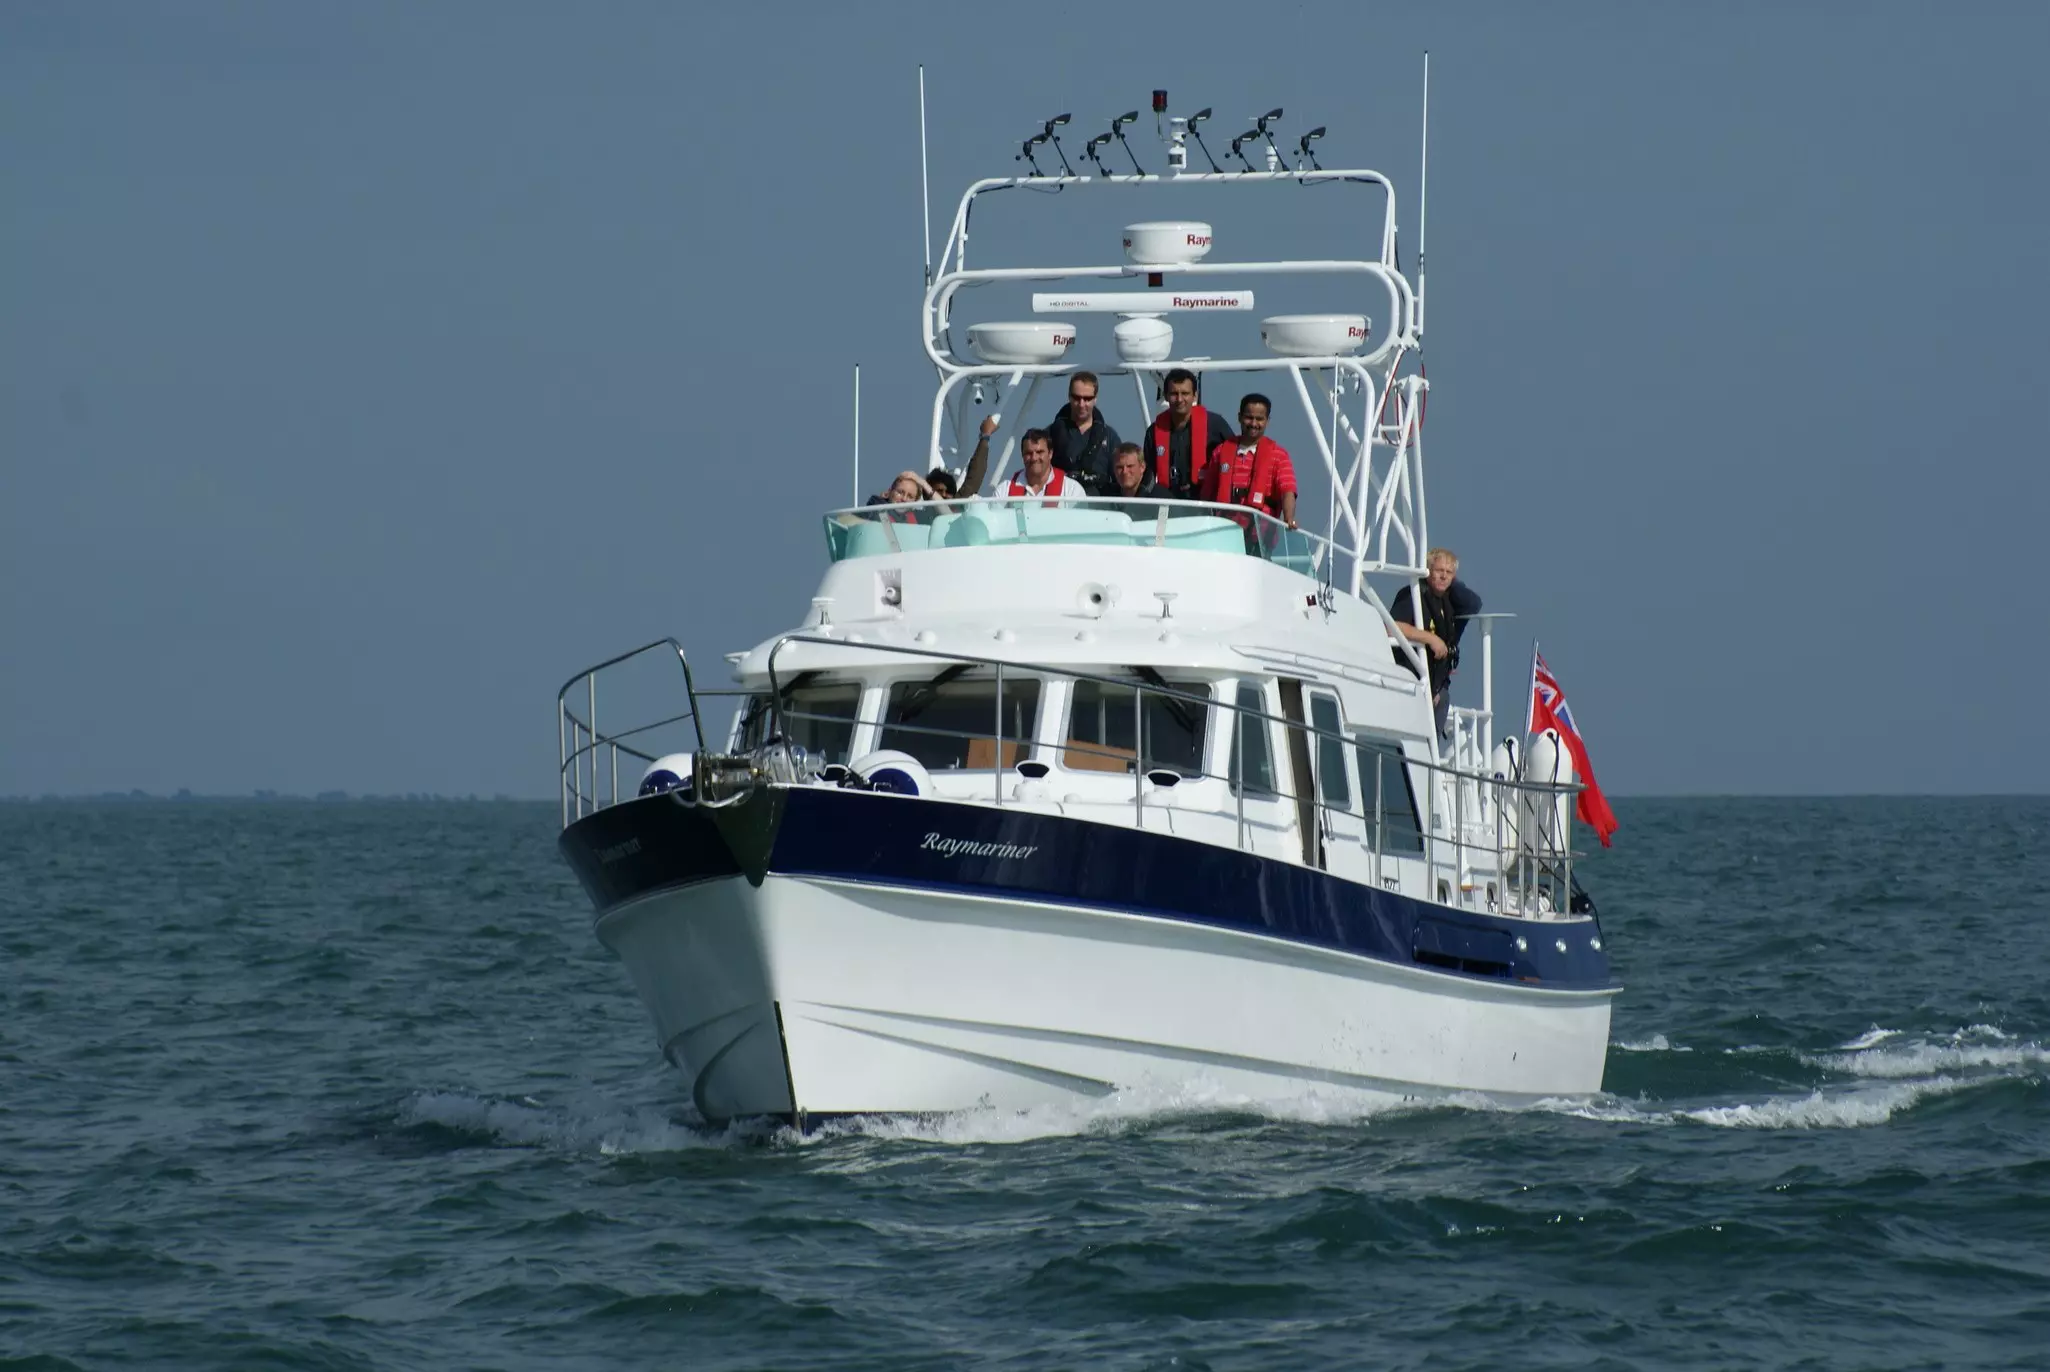 Raymariner - Test Boat for Raymarine